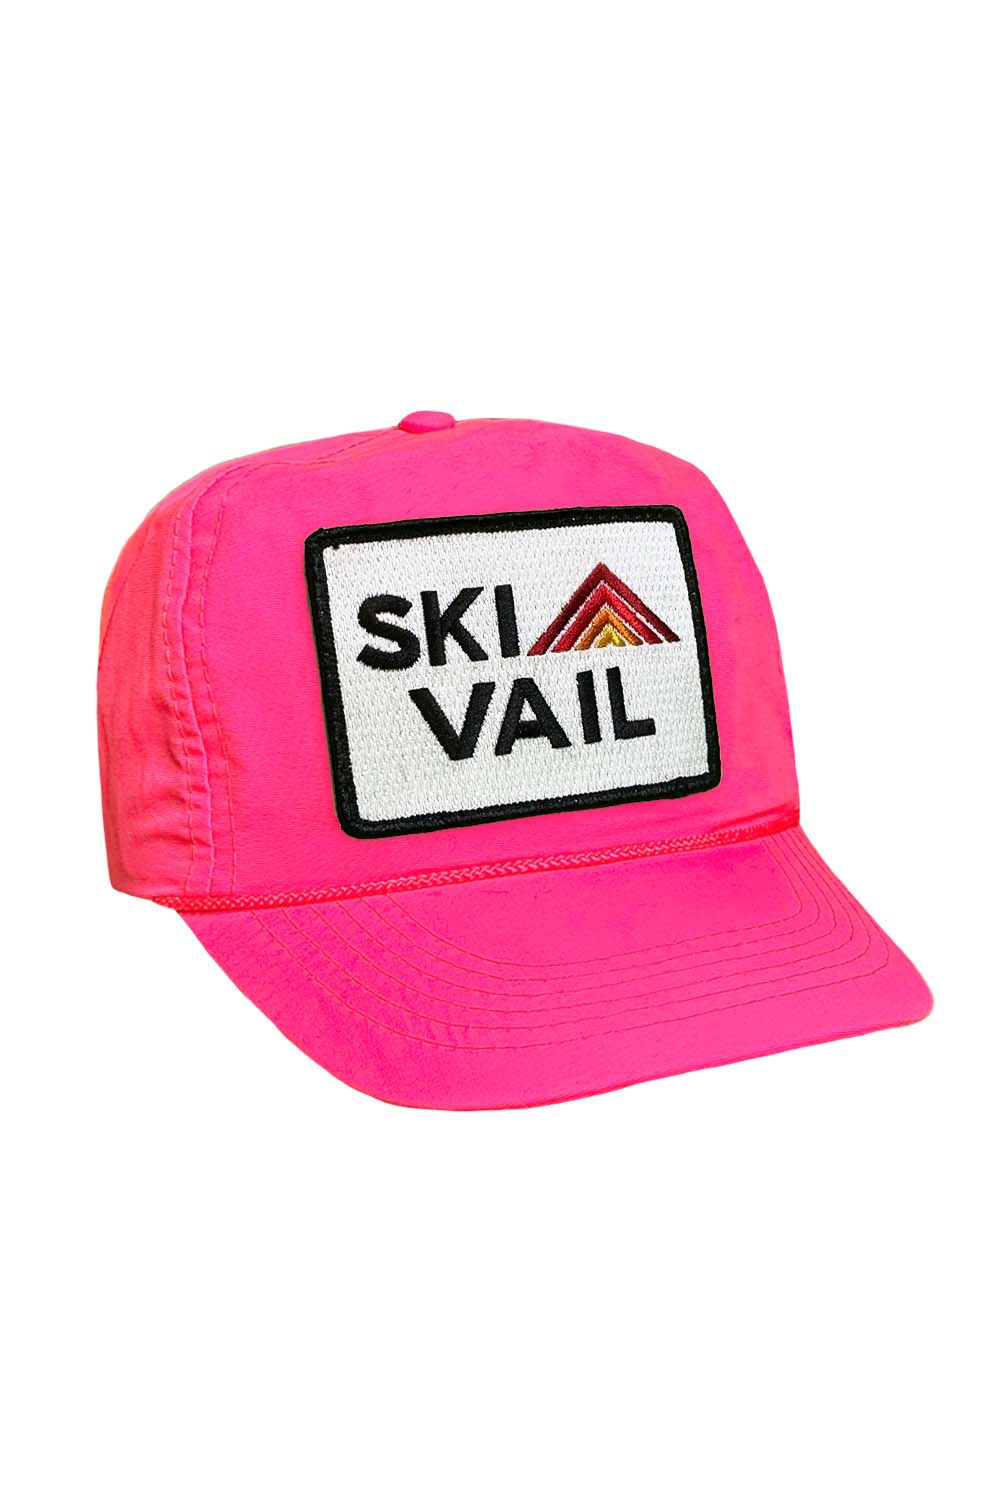 SKI VAIL - VINTAGE NYLON TRUCKER HAT HATS Aviator Nation NEON PINK 